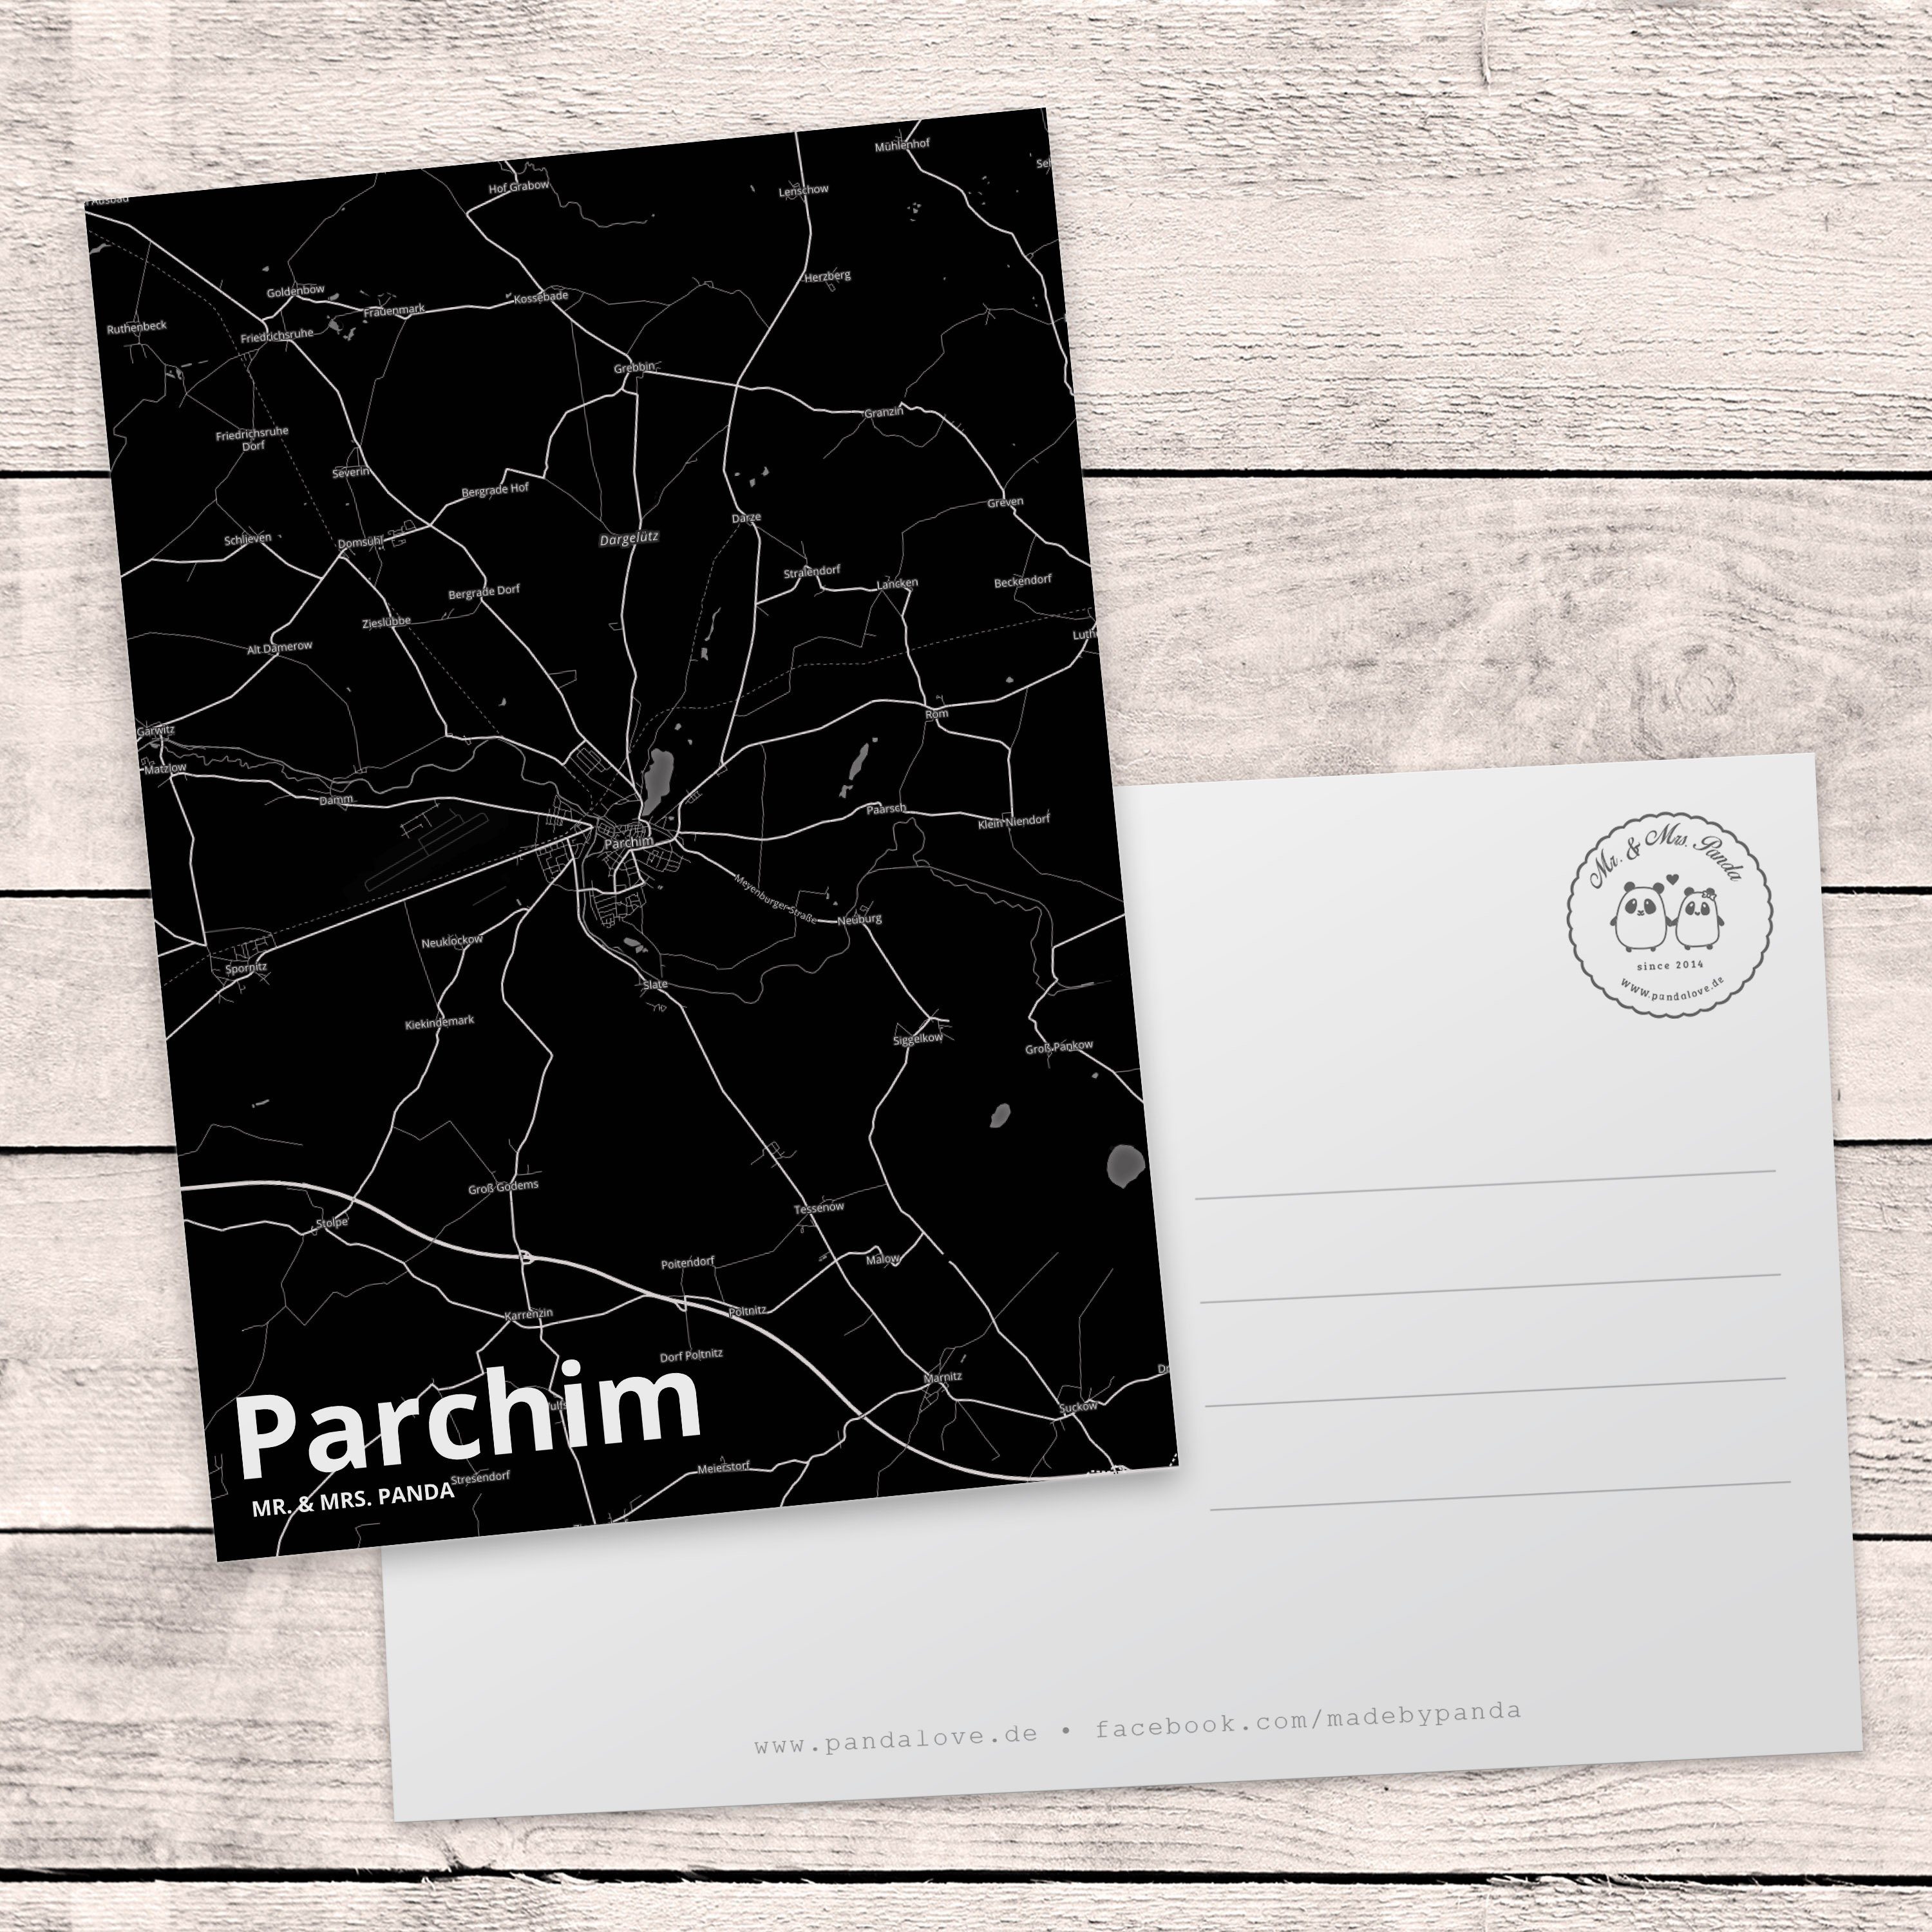 Mrs. Postkarte Städte, Mr. Parchim Panda - Dorf, Dankeskar & Geschenkkarte, Geschenk, Grußkarte,